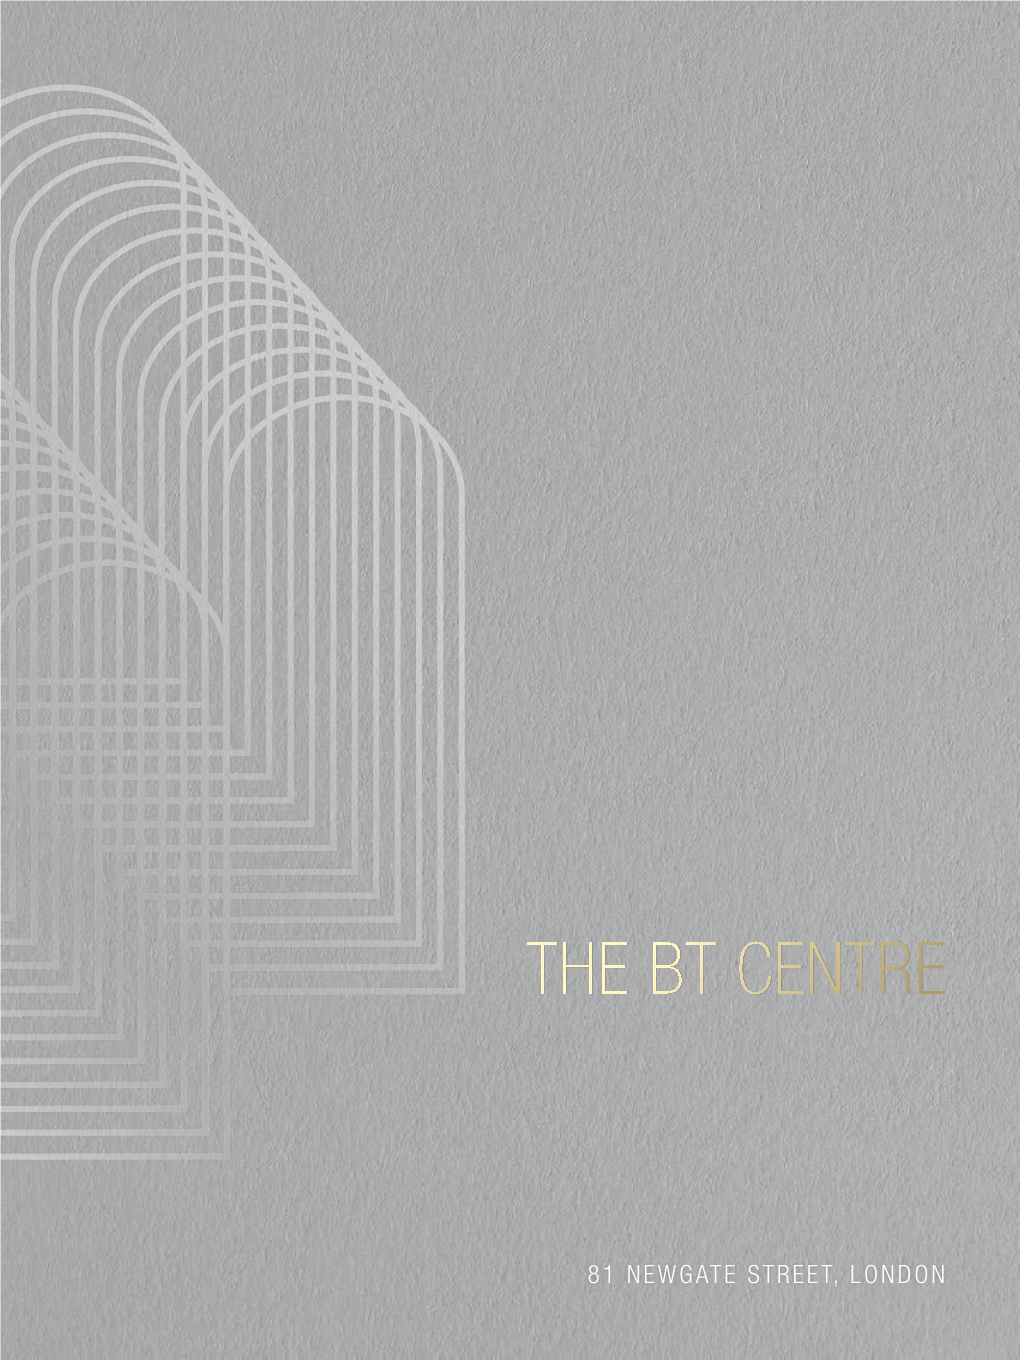 The Bt Centre the Bt Centre